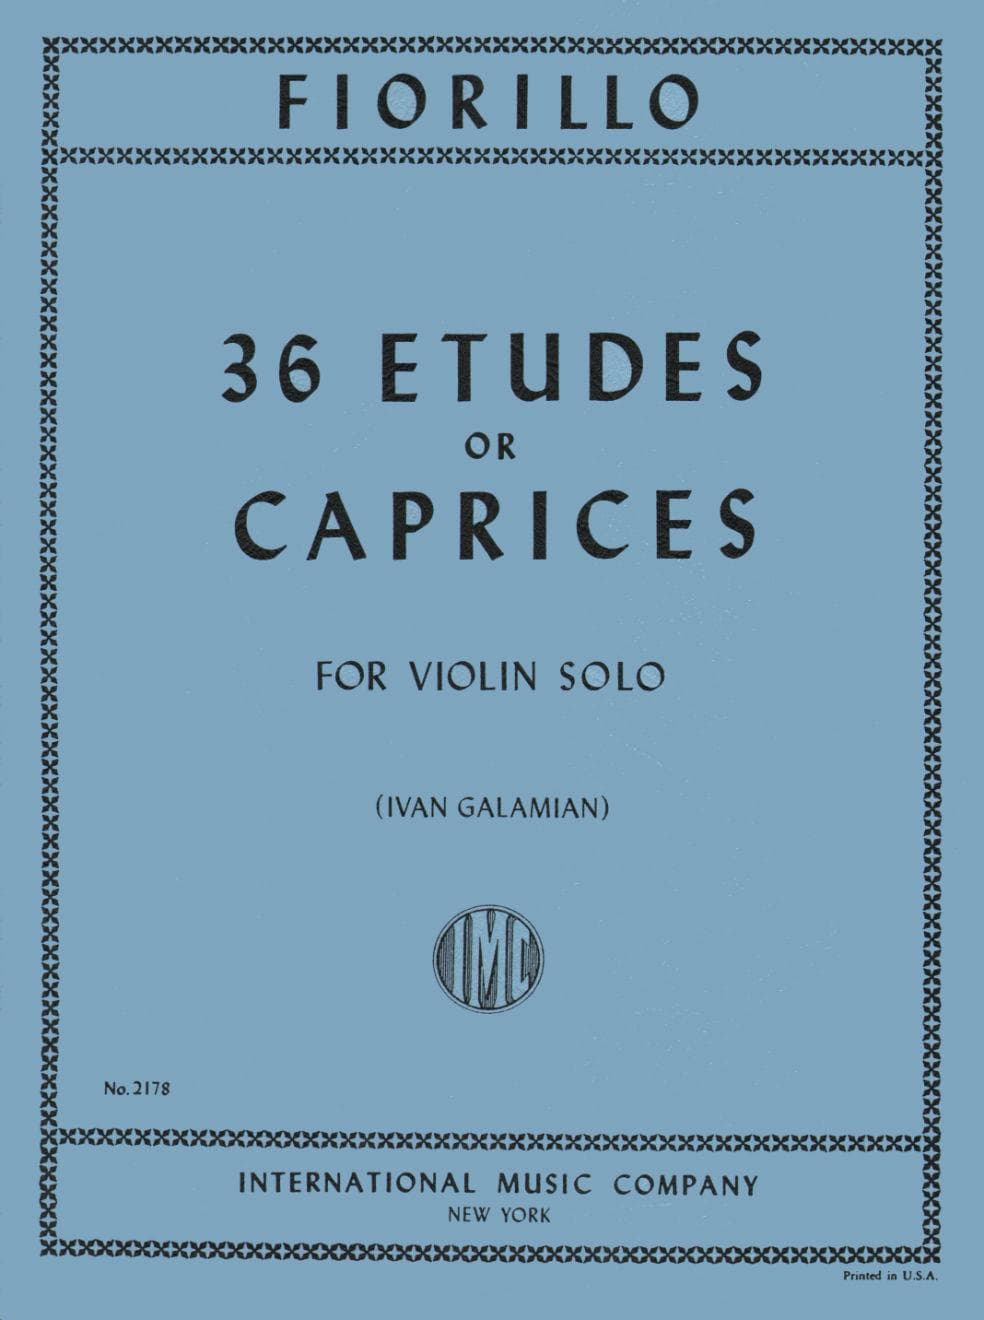 Fiorillo, Federigo - 36 Etudes or Caprices - Violin - edited by Ivan Galamian - International Edition